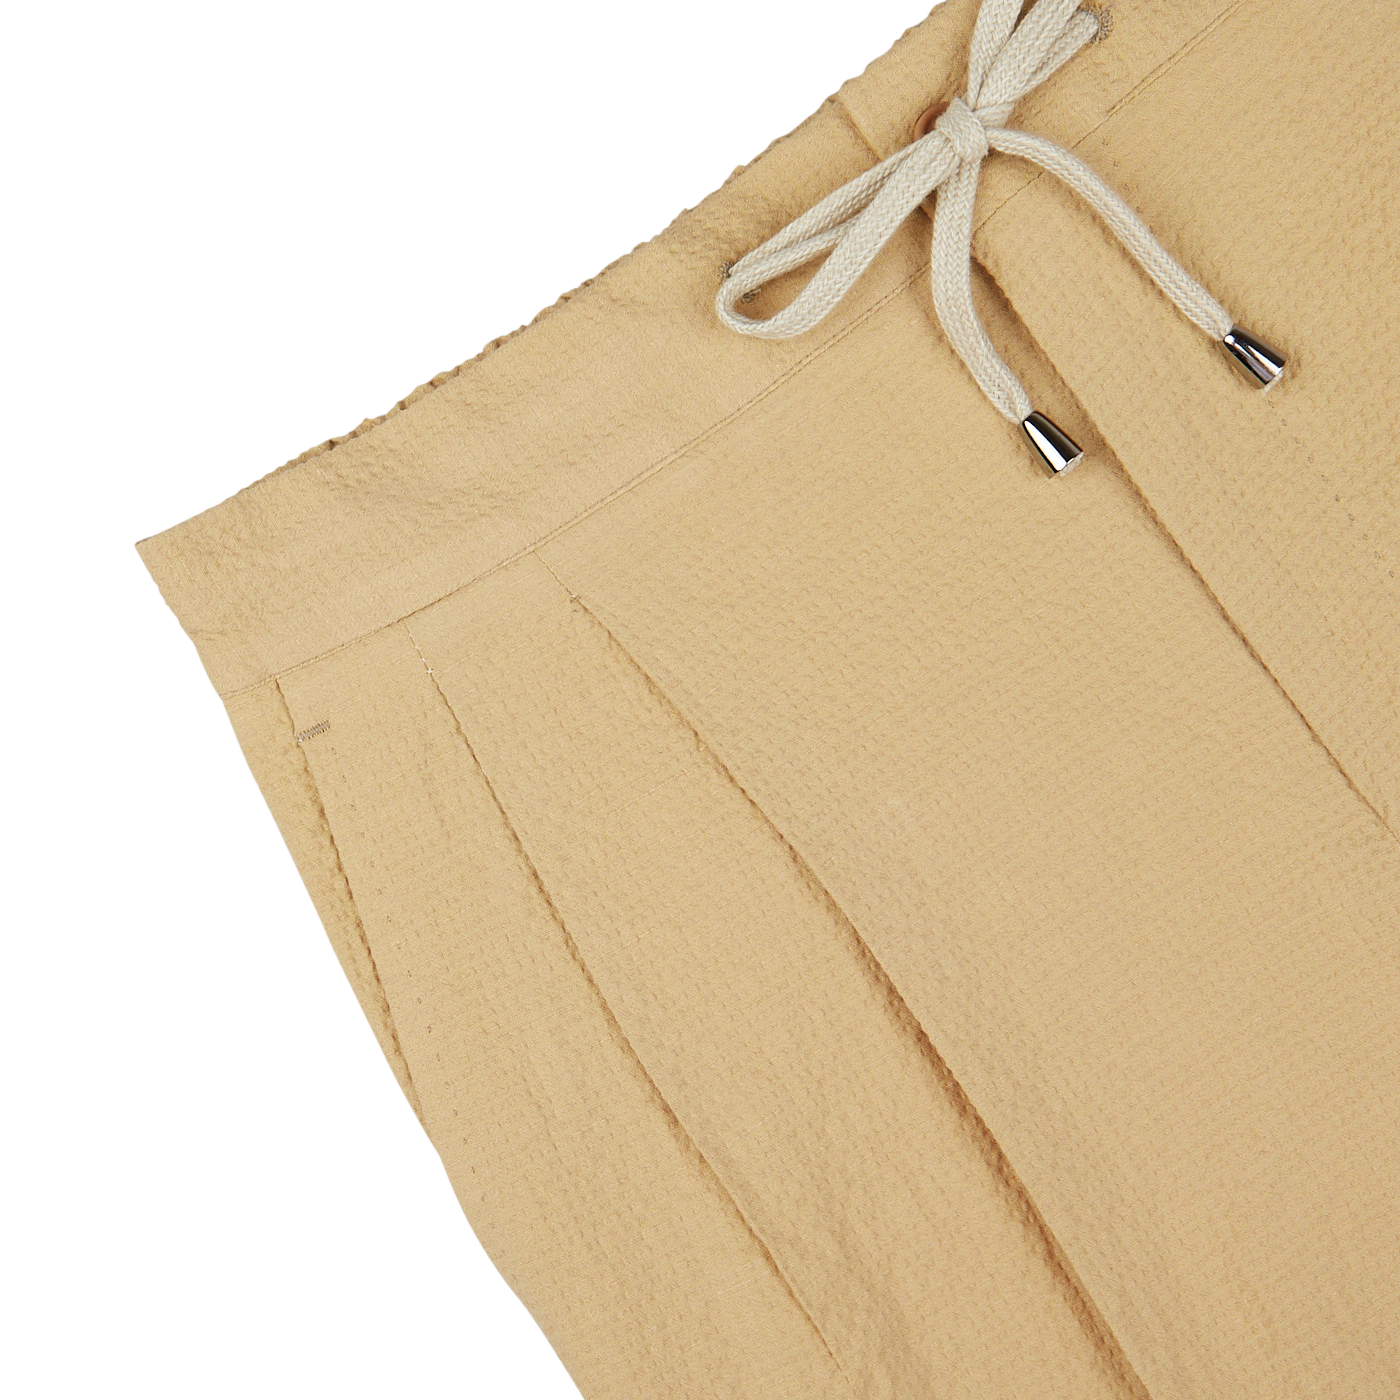 A close up of De Petrillo caramel beige casual trousers.